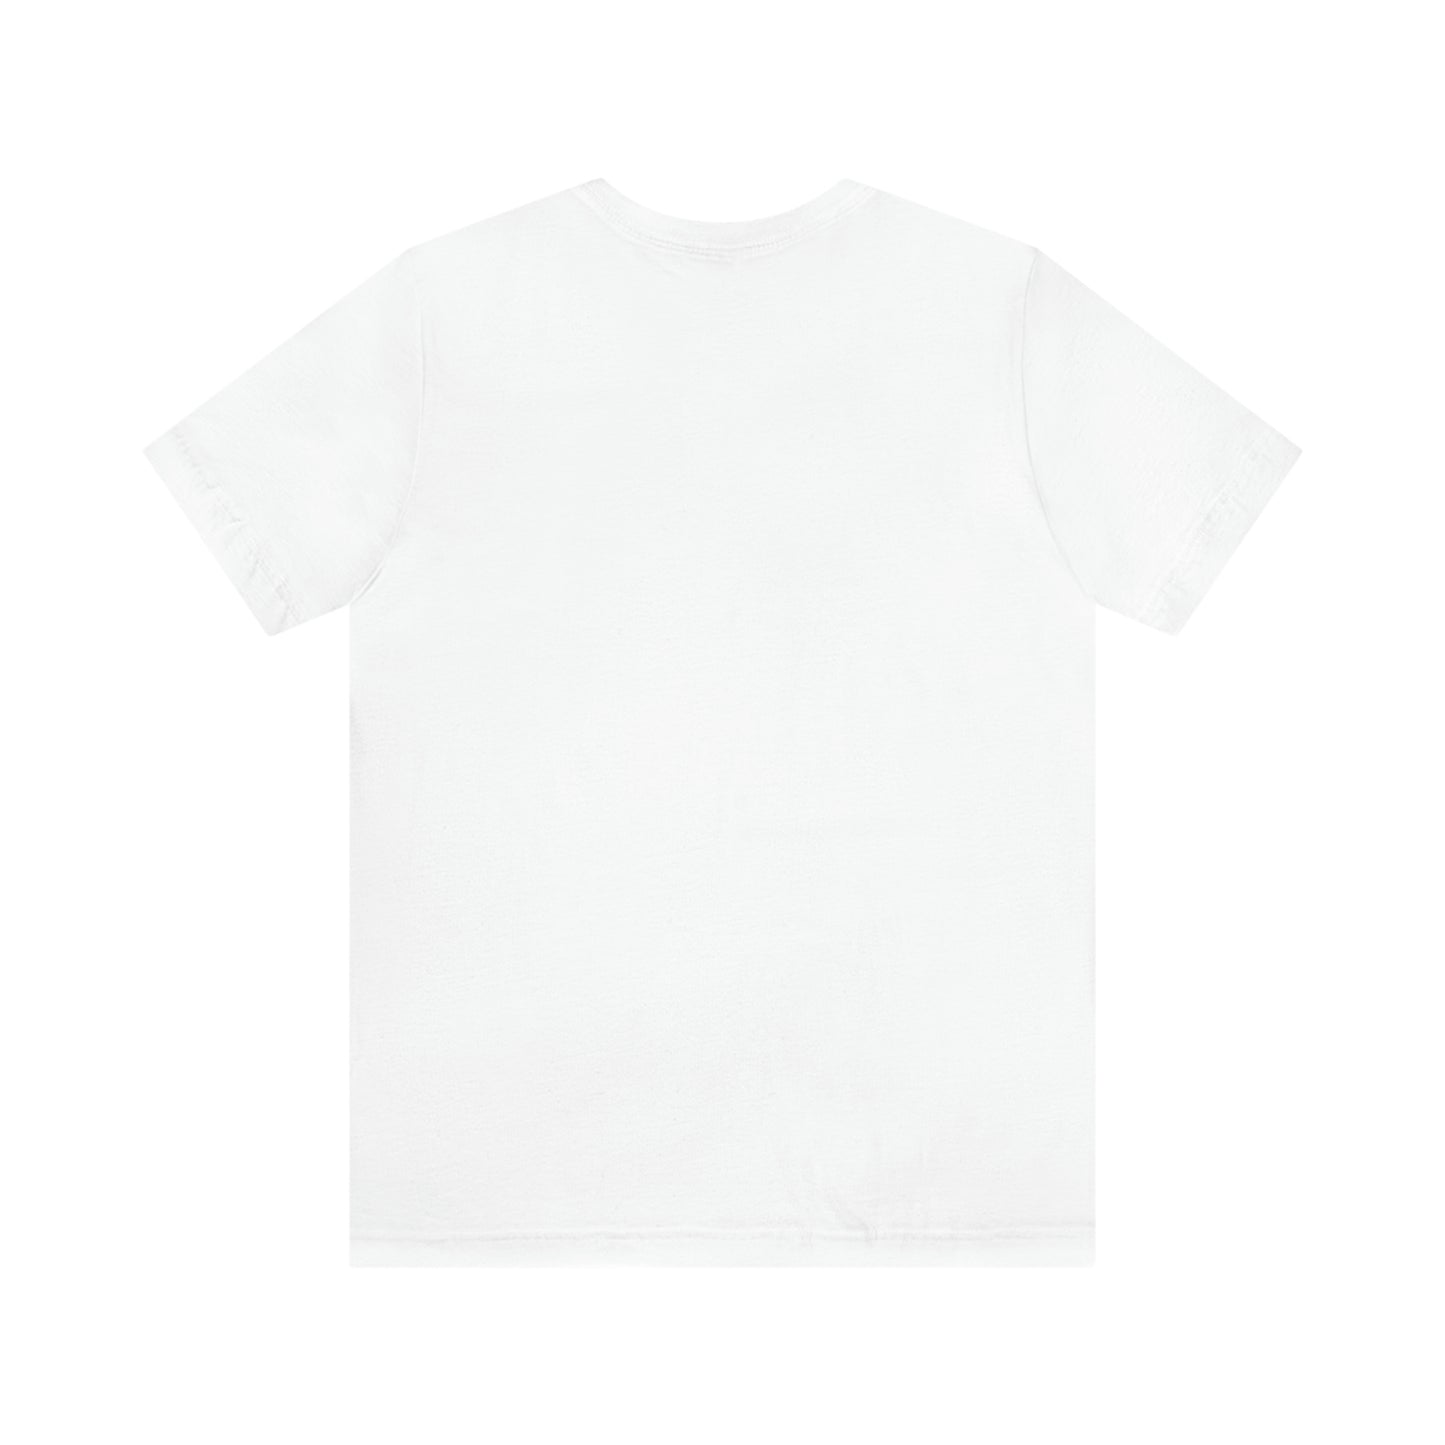 Maniac Team Shirt White